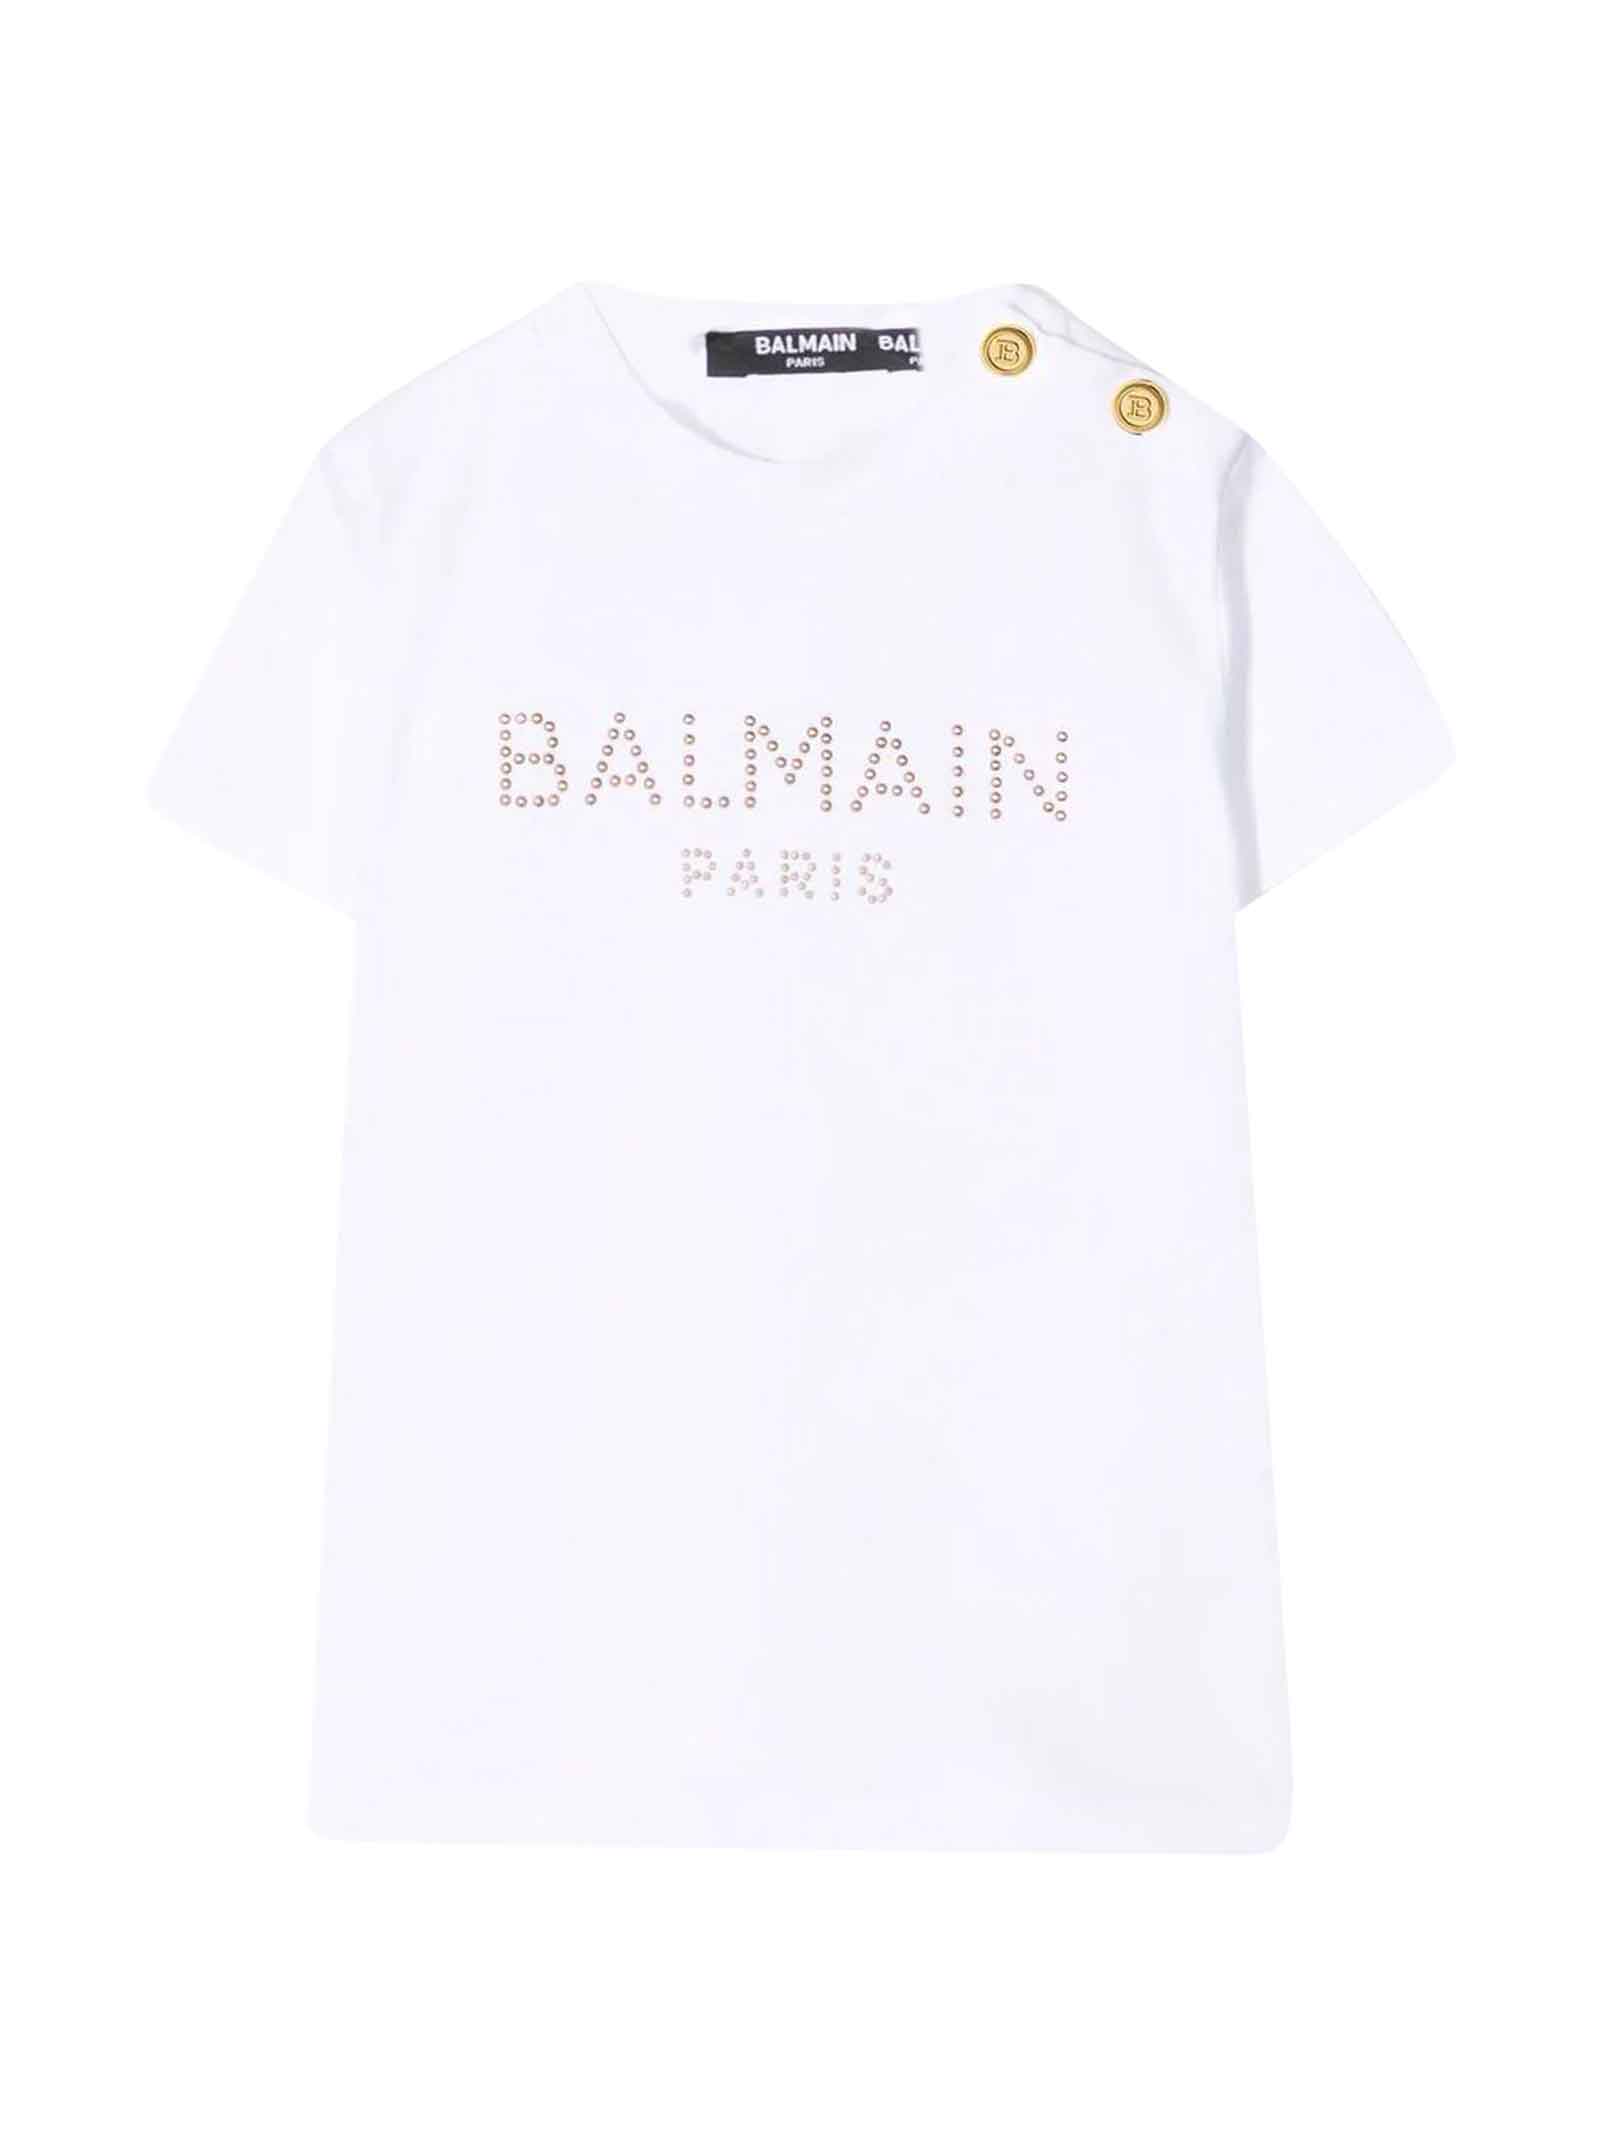 Balmain White T-shirt Unisex